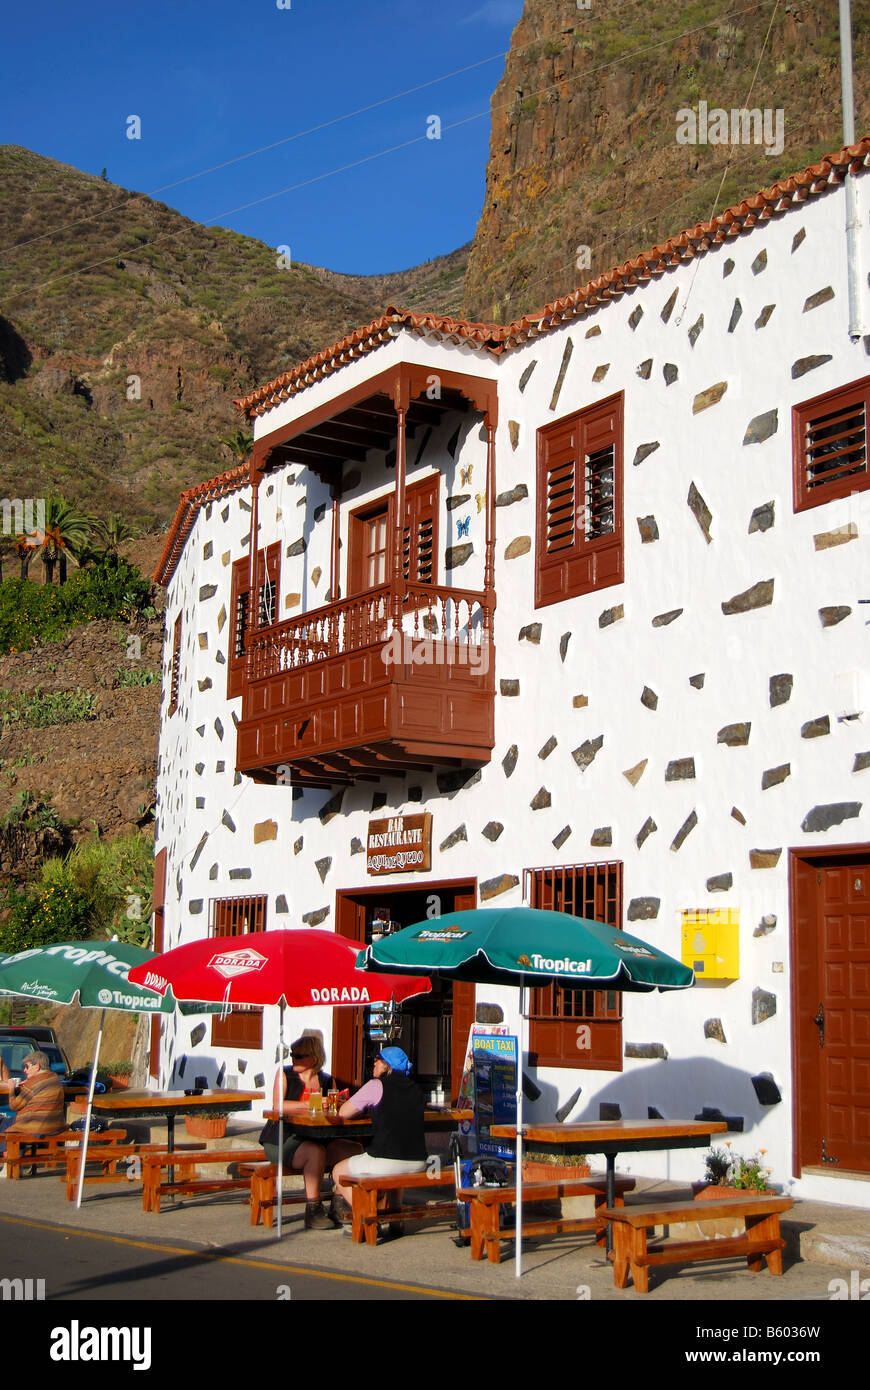 Mountain restaurant, Masca village, The Teno, Tenerife, Canary Islands, Spain Stock Photo